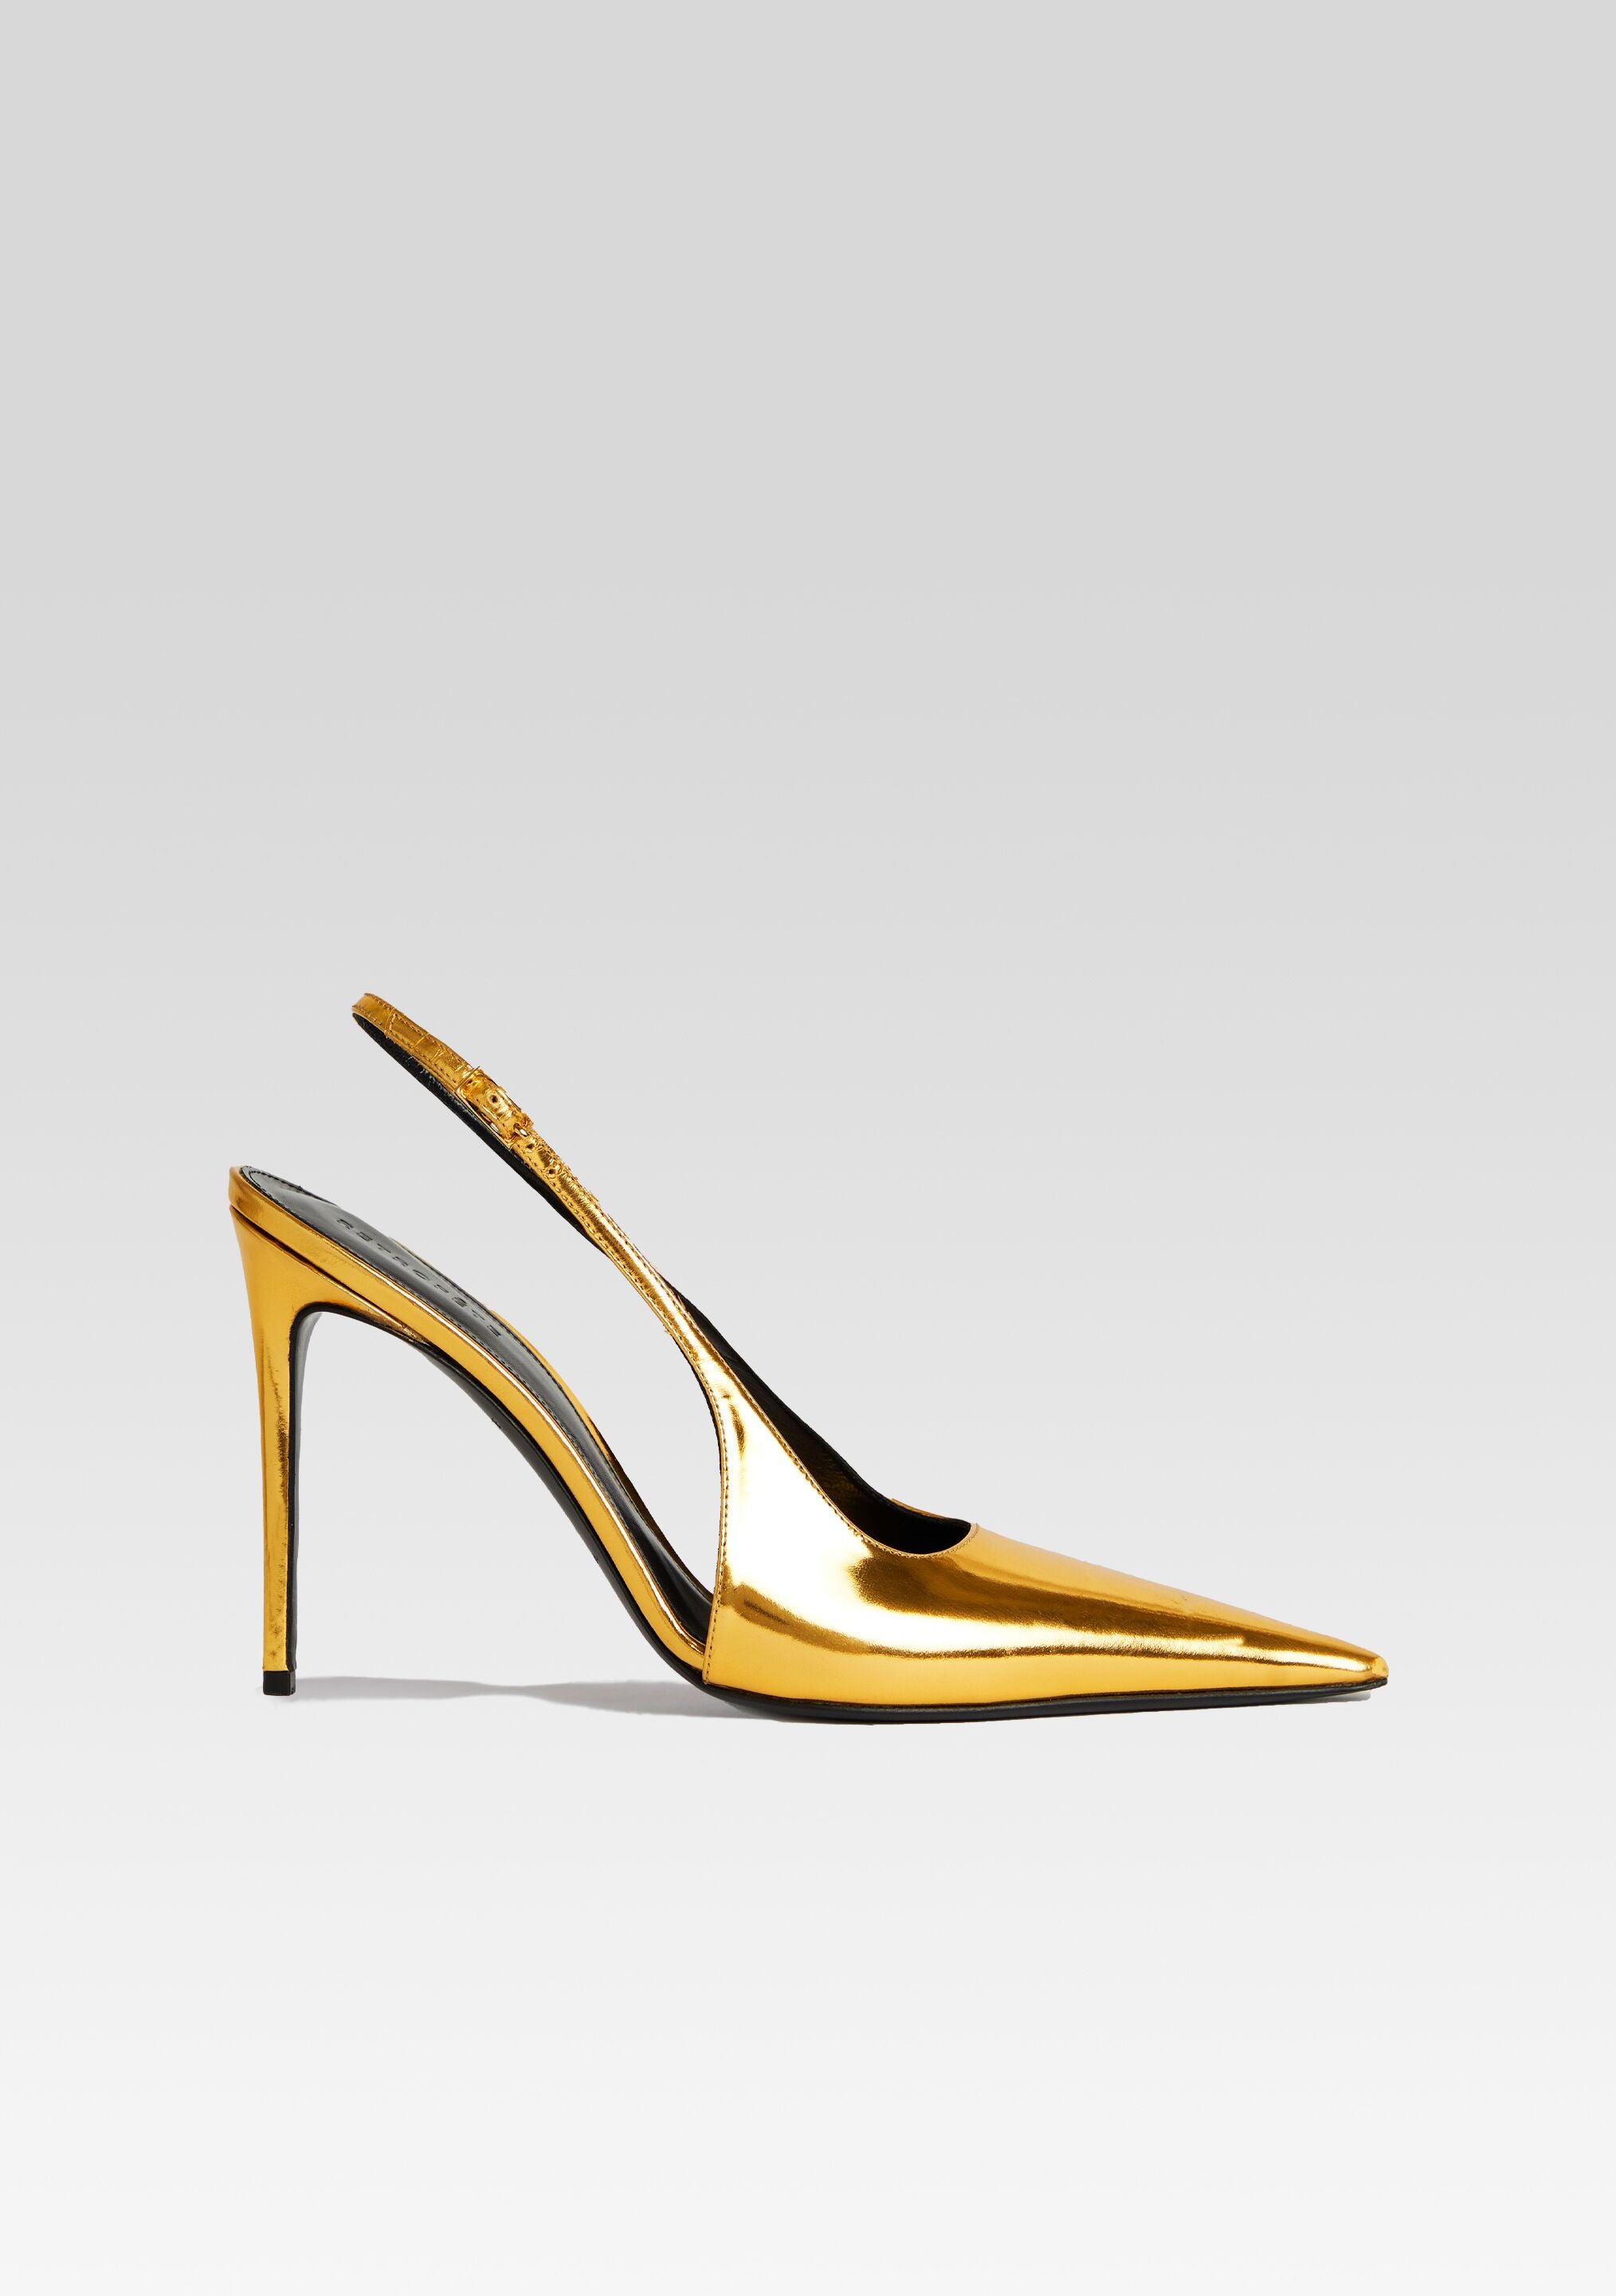 Zara Black Suede Peep Toe Pumps with Gold Platform Size 39